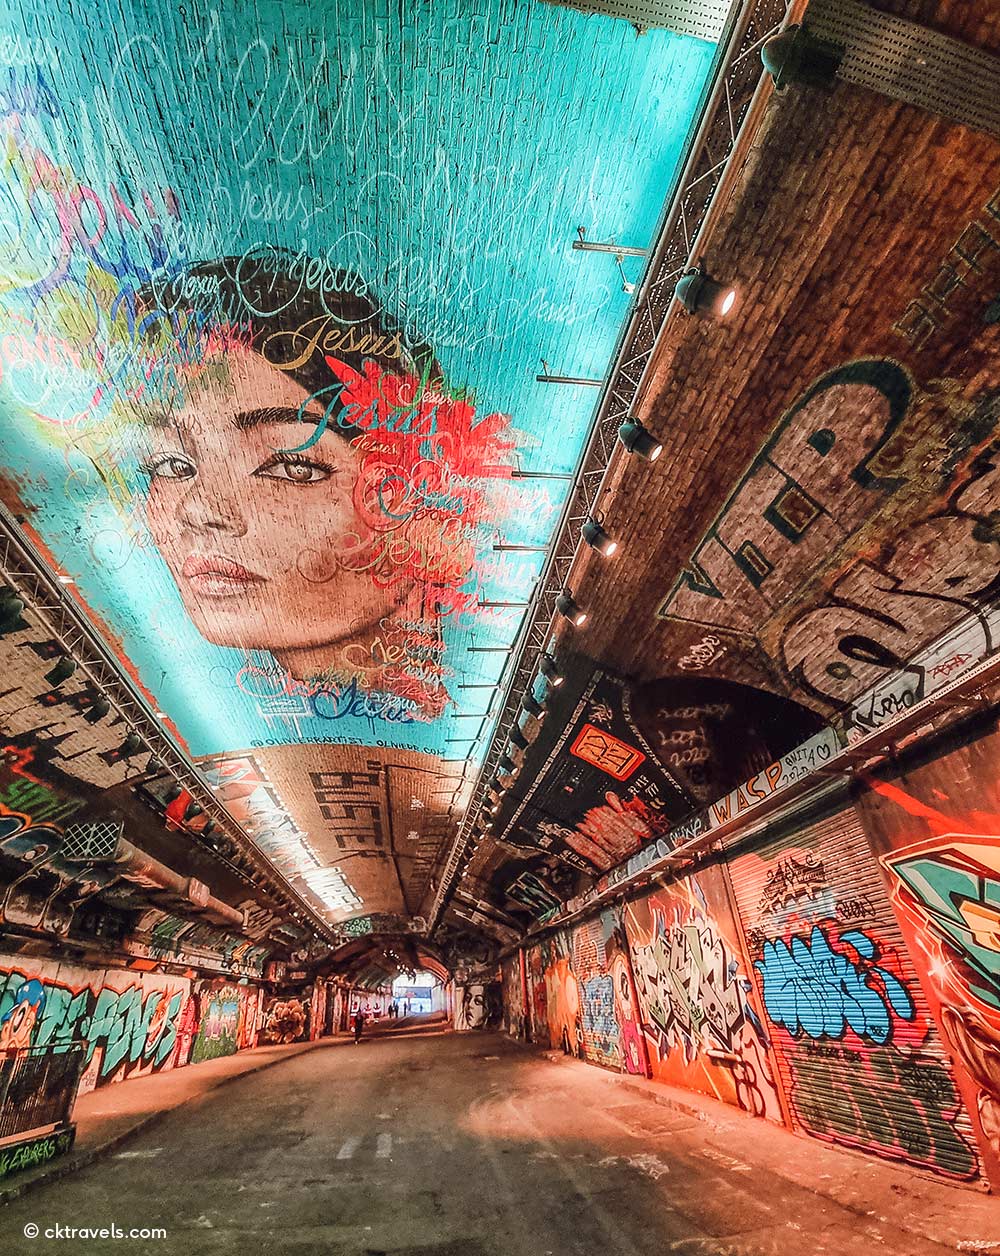 Leake Street Arches graffiti tunnel / street art near Waterloo station